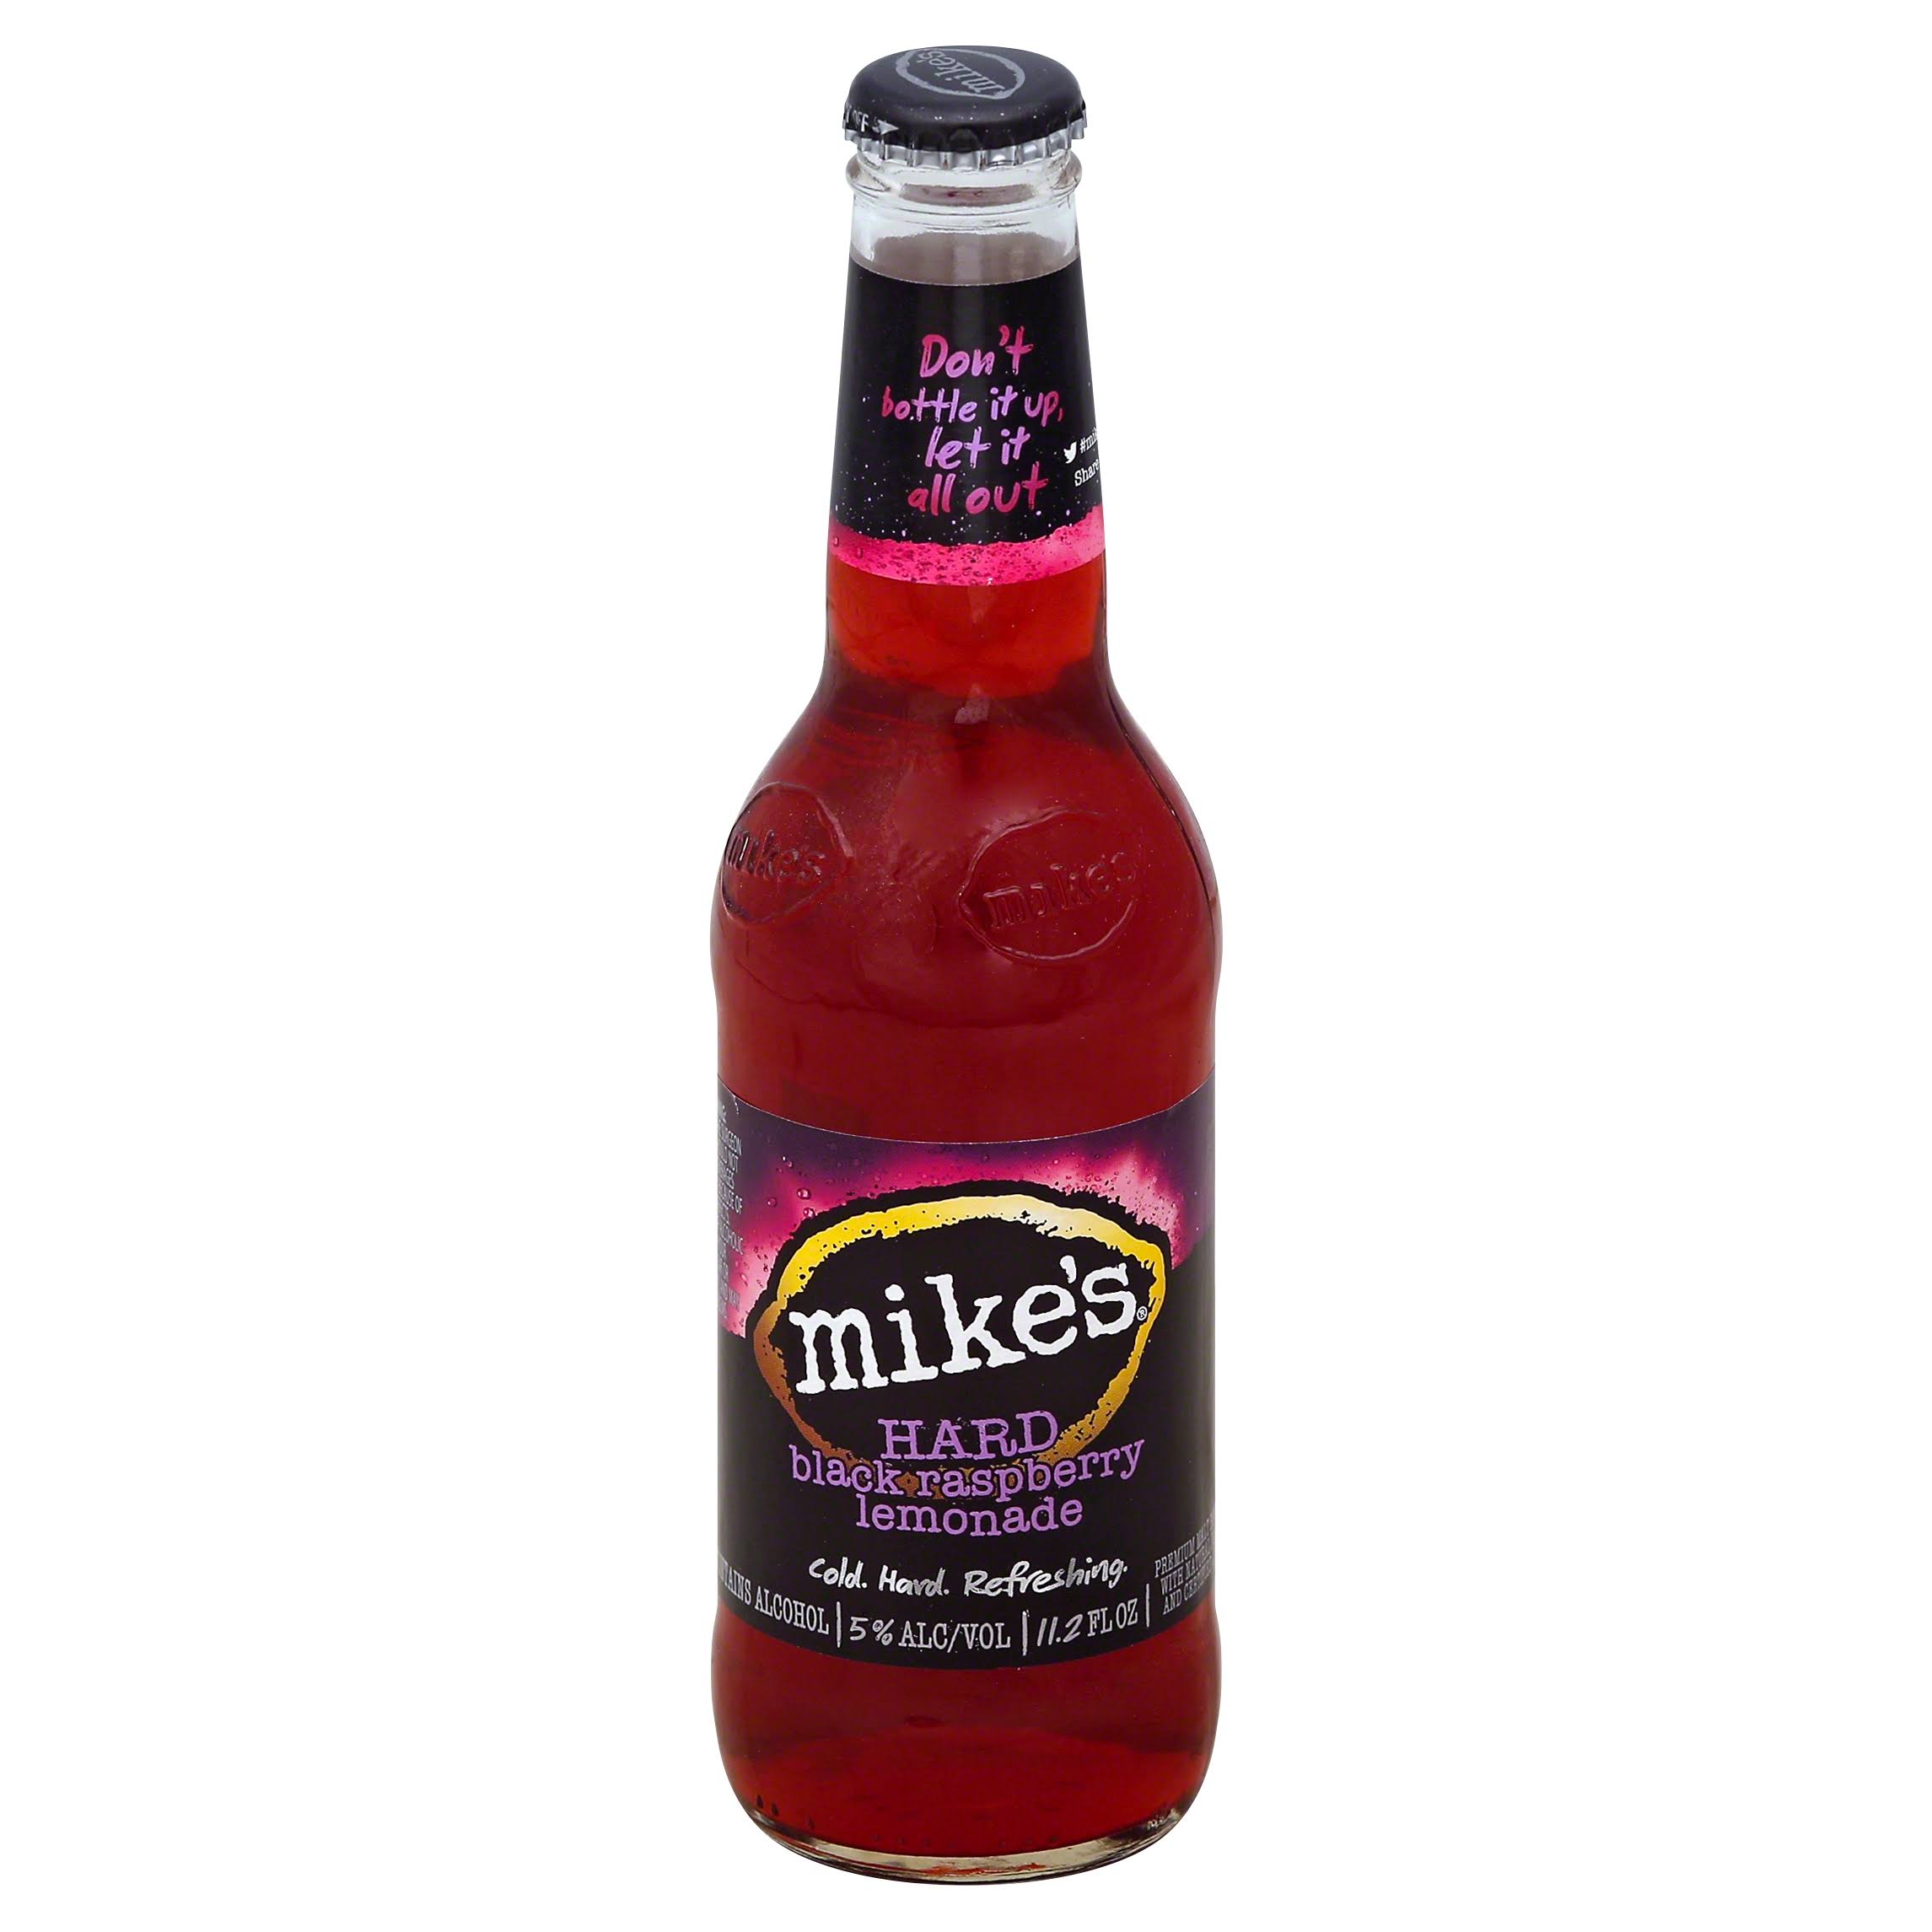 Mikes Malt Beverage, Premium, Hard Black Raspberry Lemonade - 11.2 fl oz